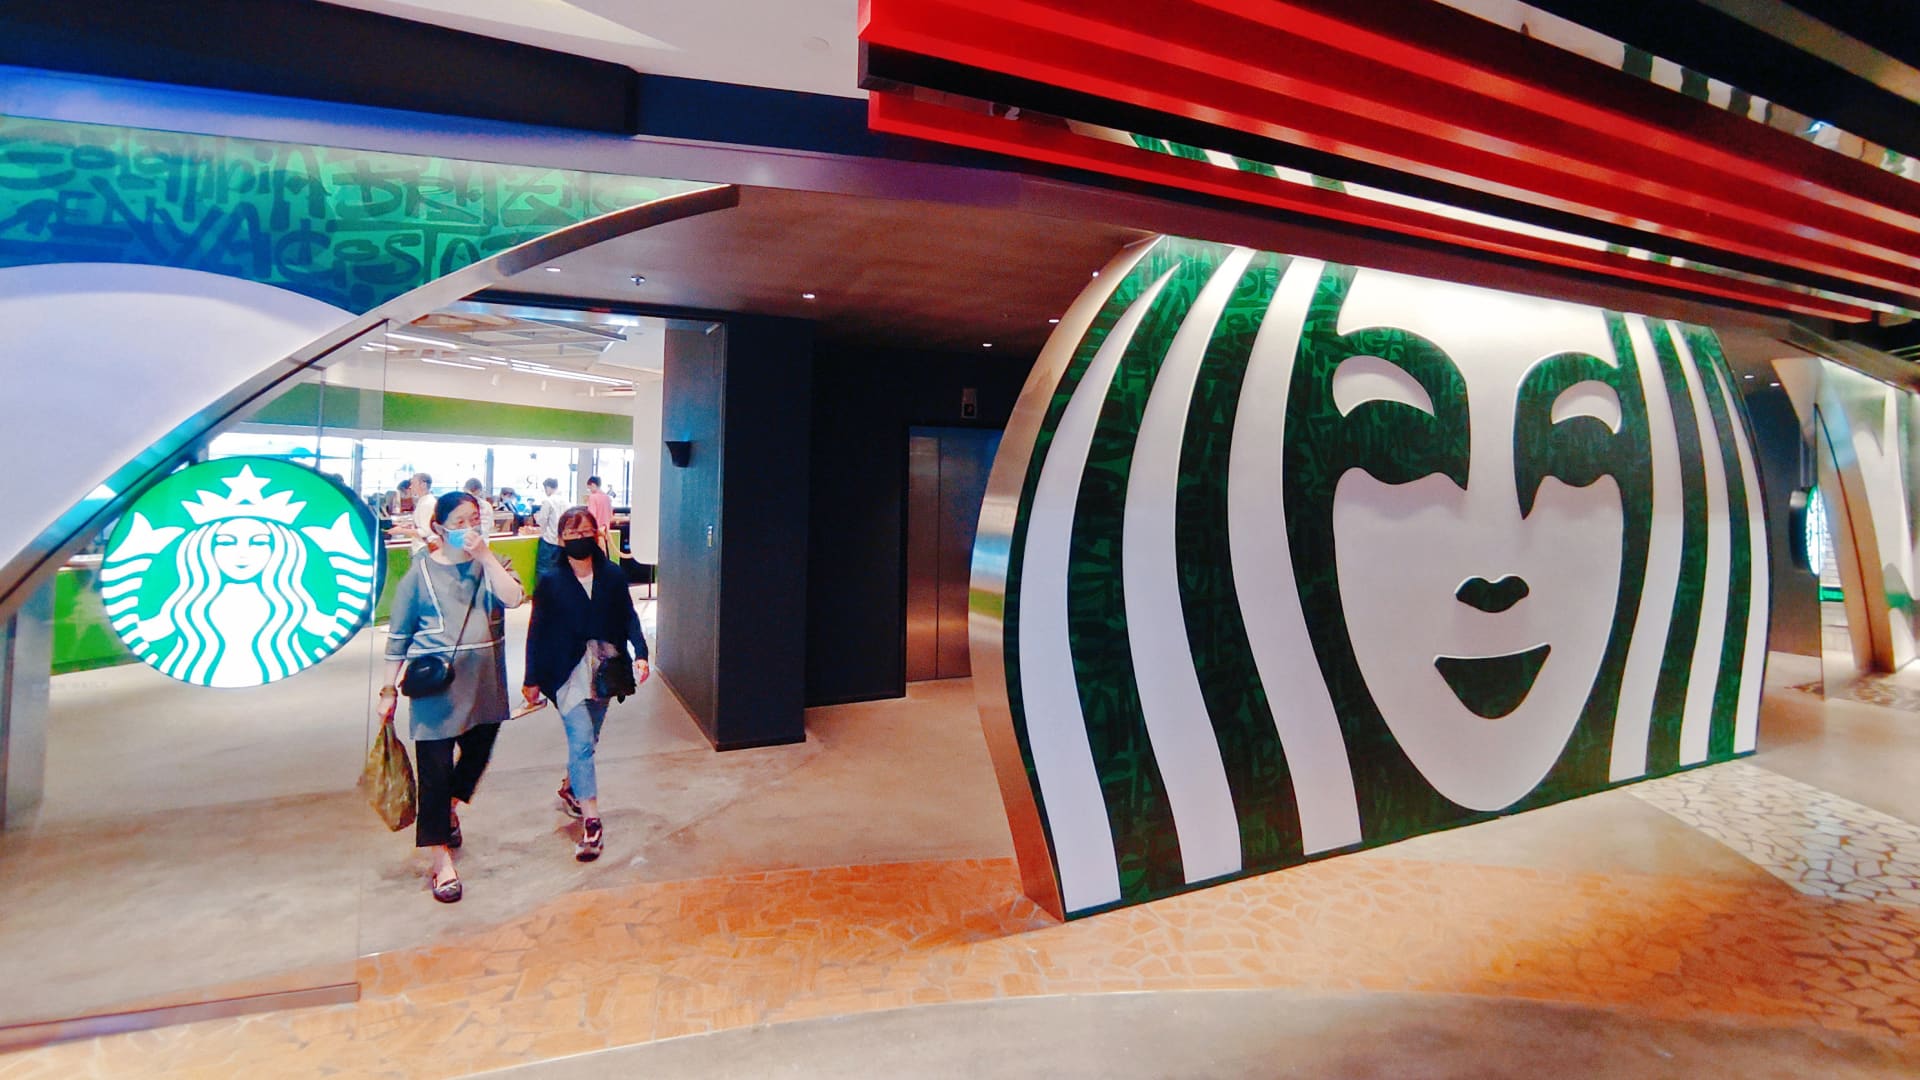 Starbucks (SBUX) Q4 2022 earnings beat estimates